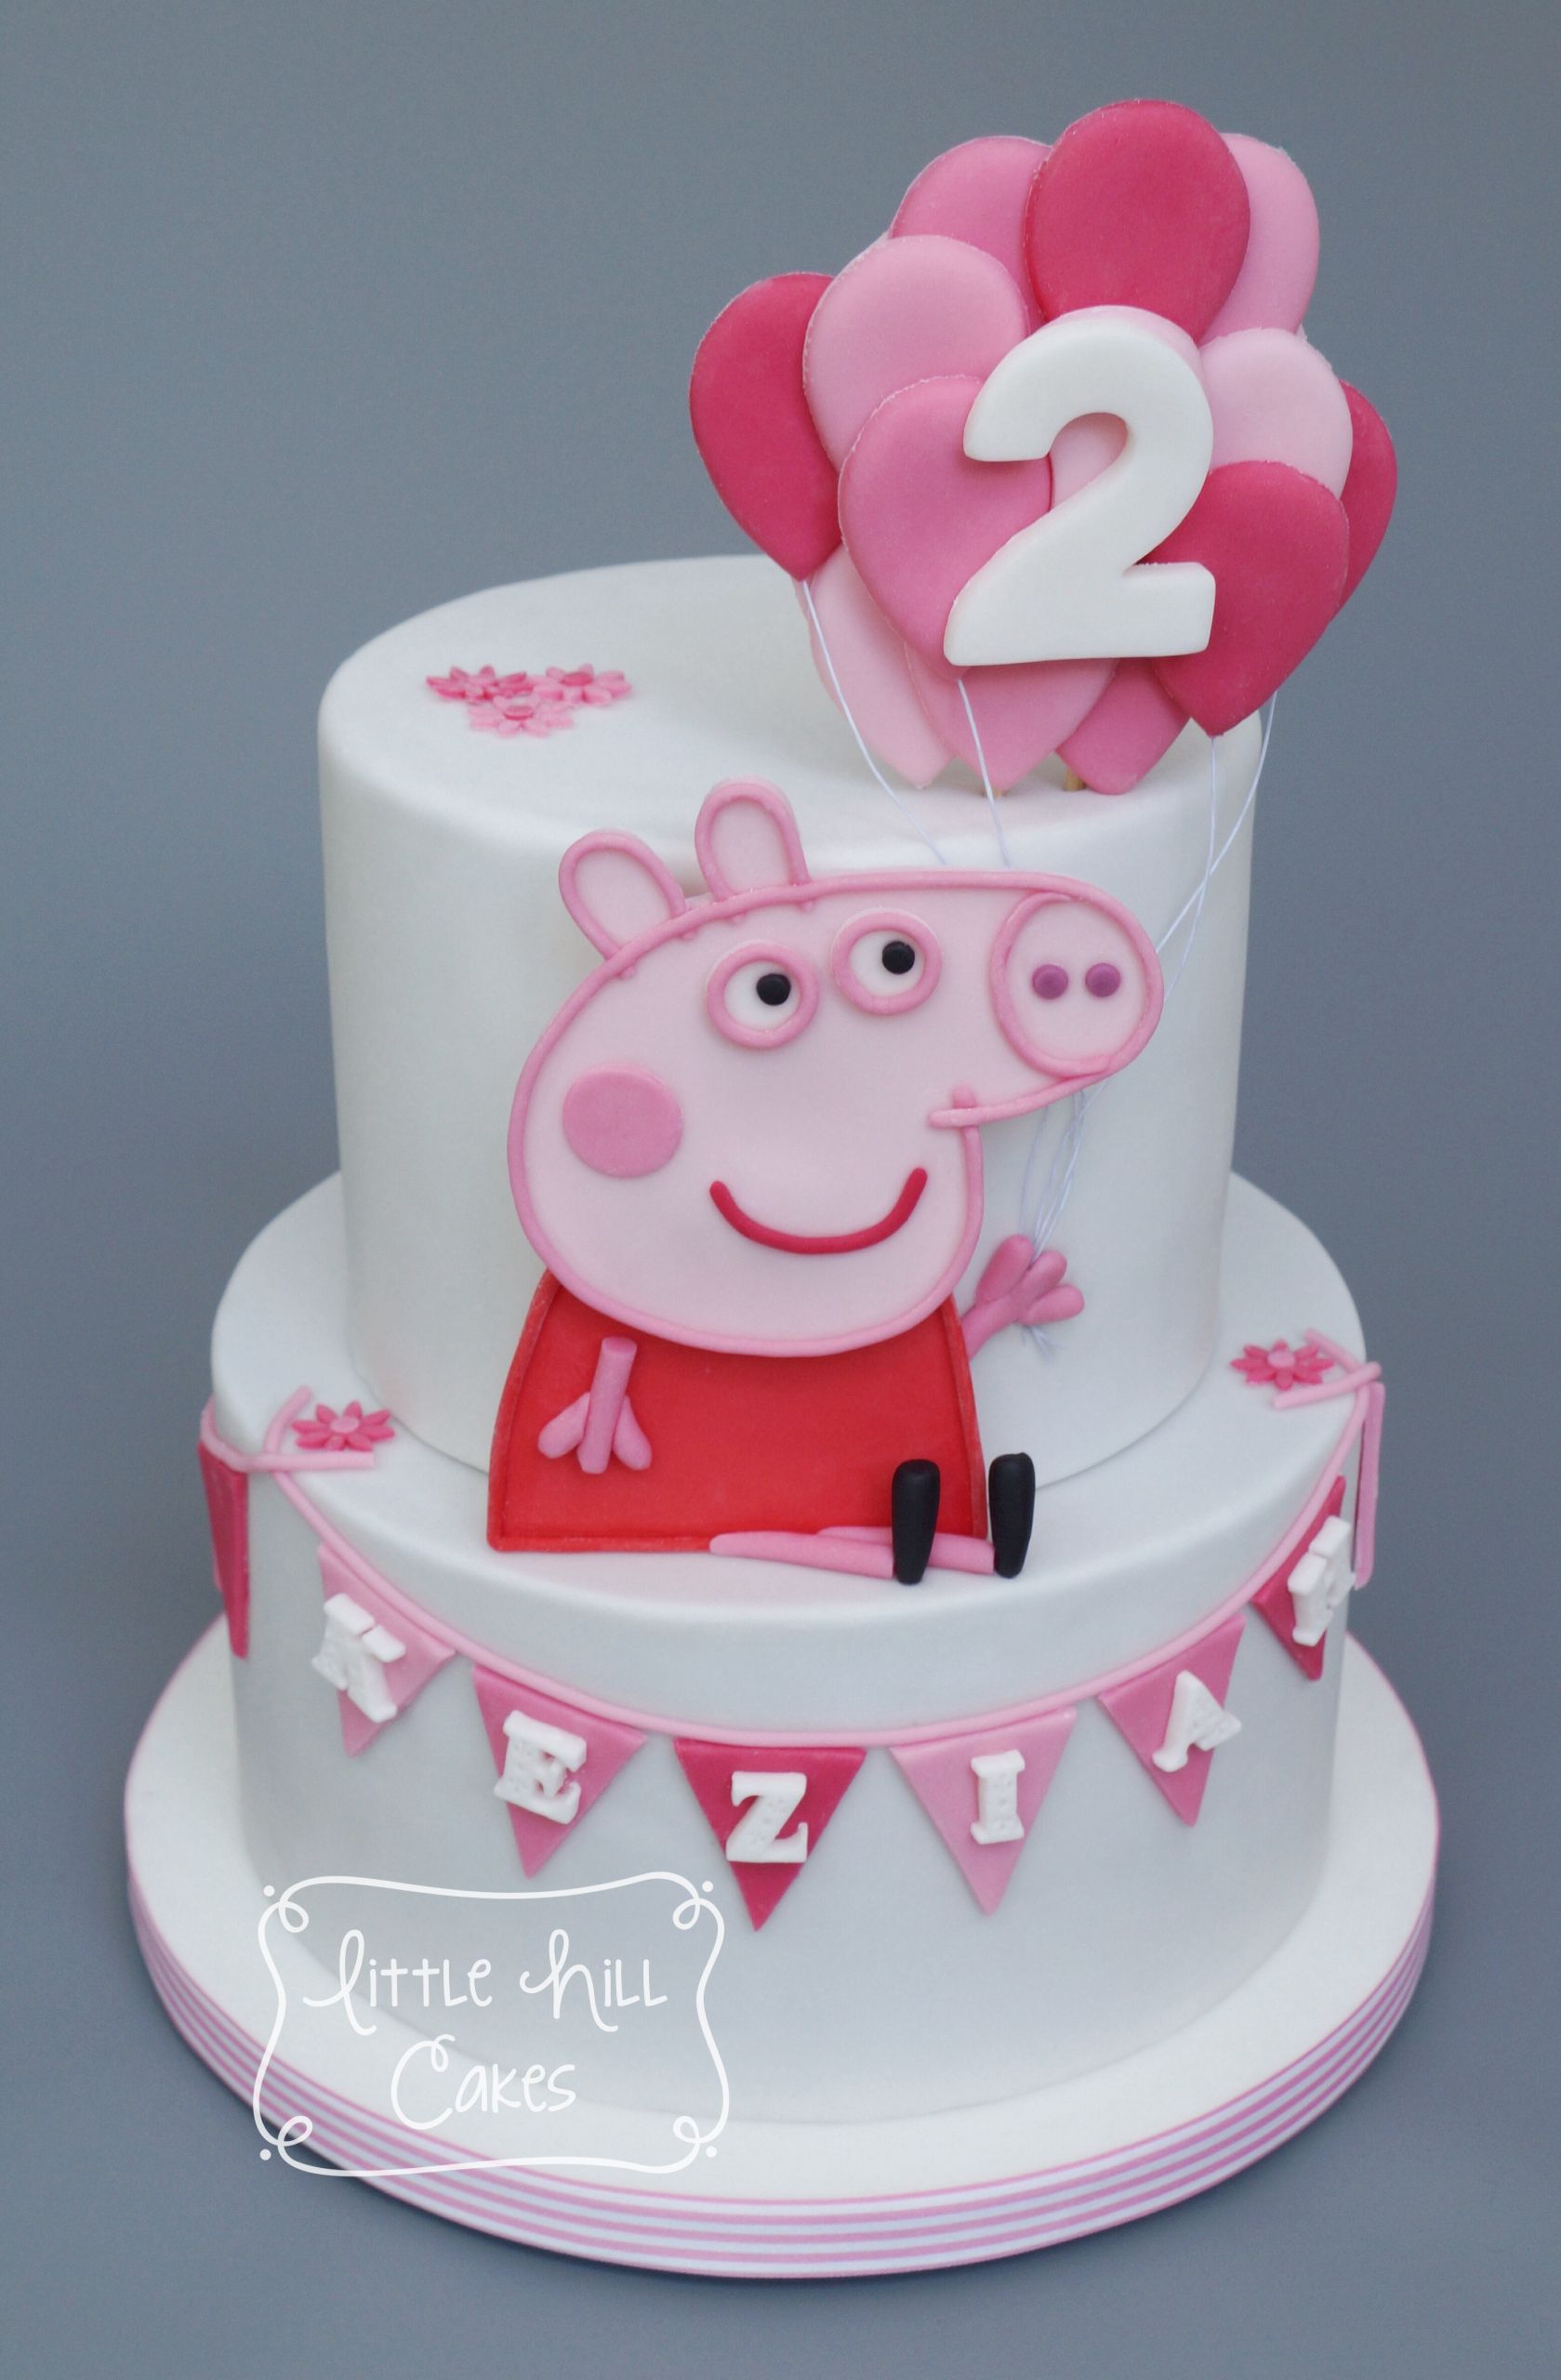 Peppa Pig Birthday Cakes
 Peppa Pig Cake